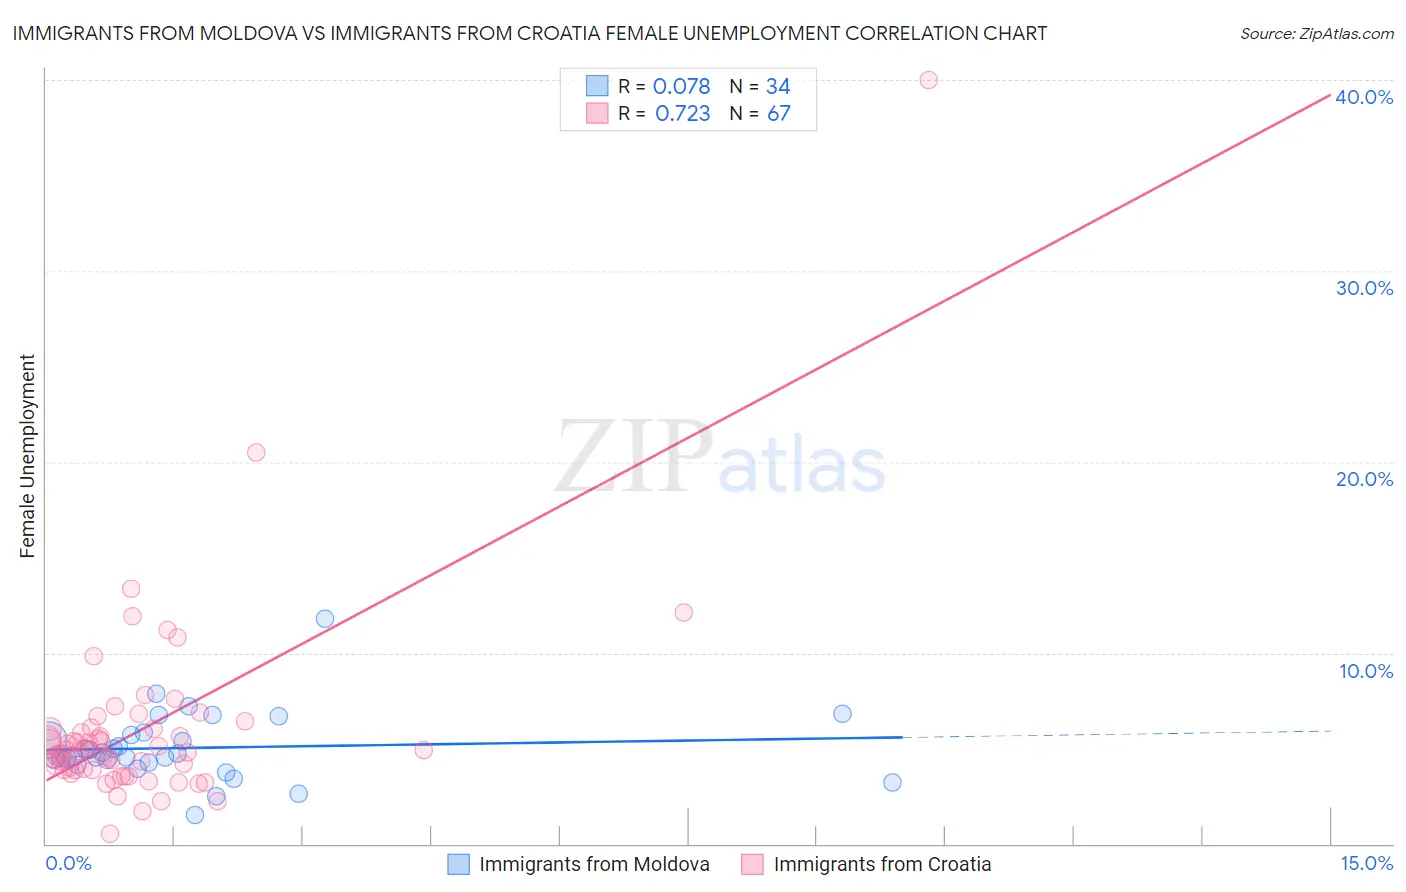 Immigrants from Moldova vs Immigrants from Croatia Female Unemployment